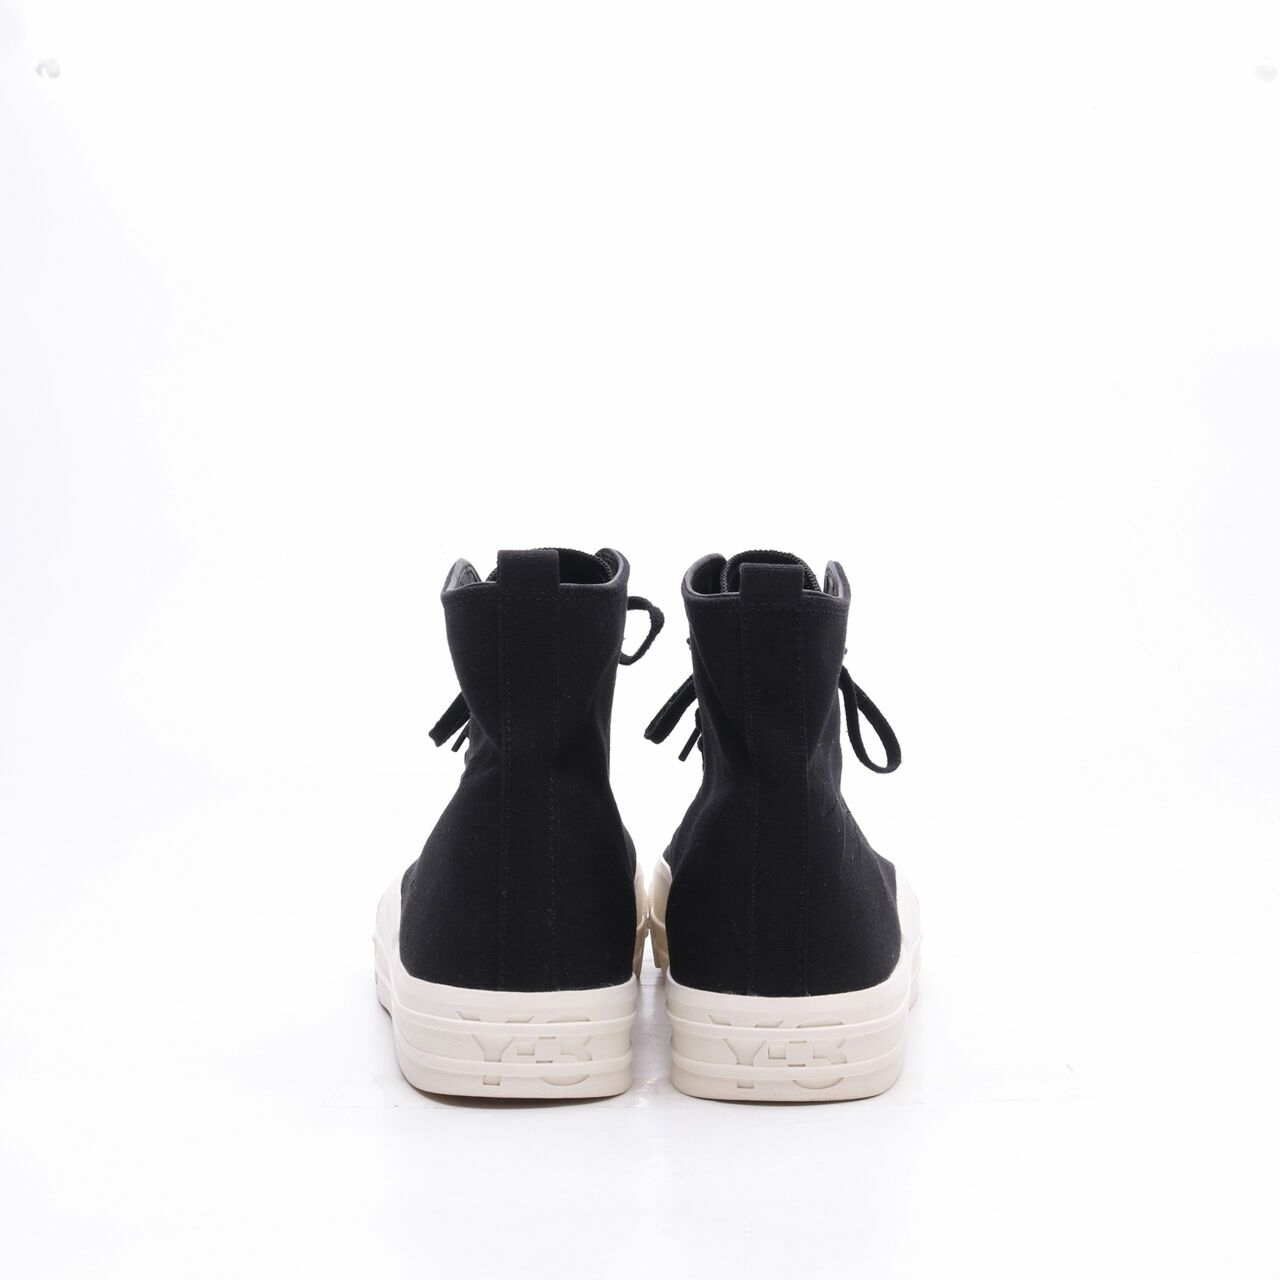 Y-3 Yohji Yamamoto x Adidas  Mid Black Sneakers